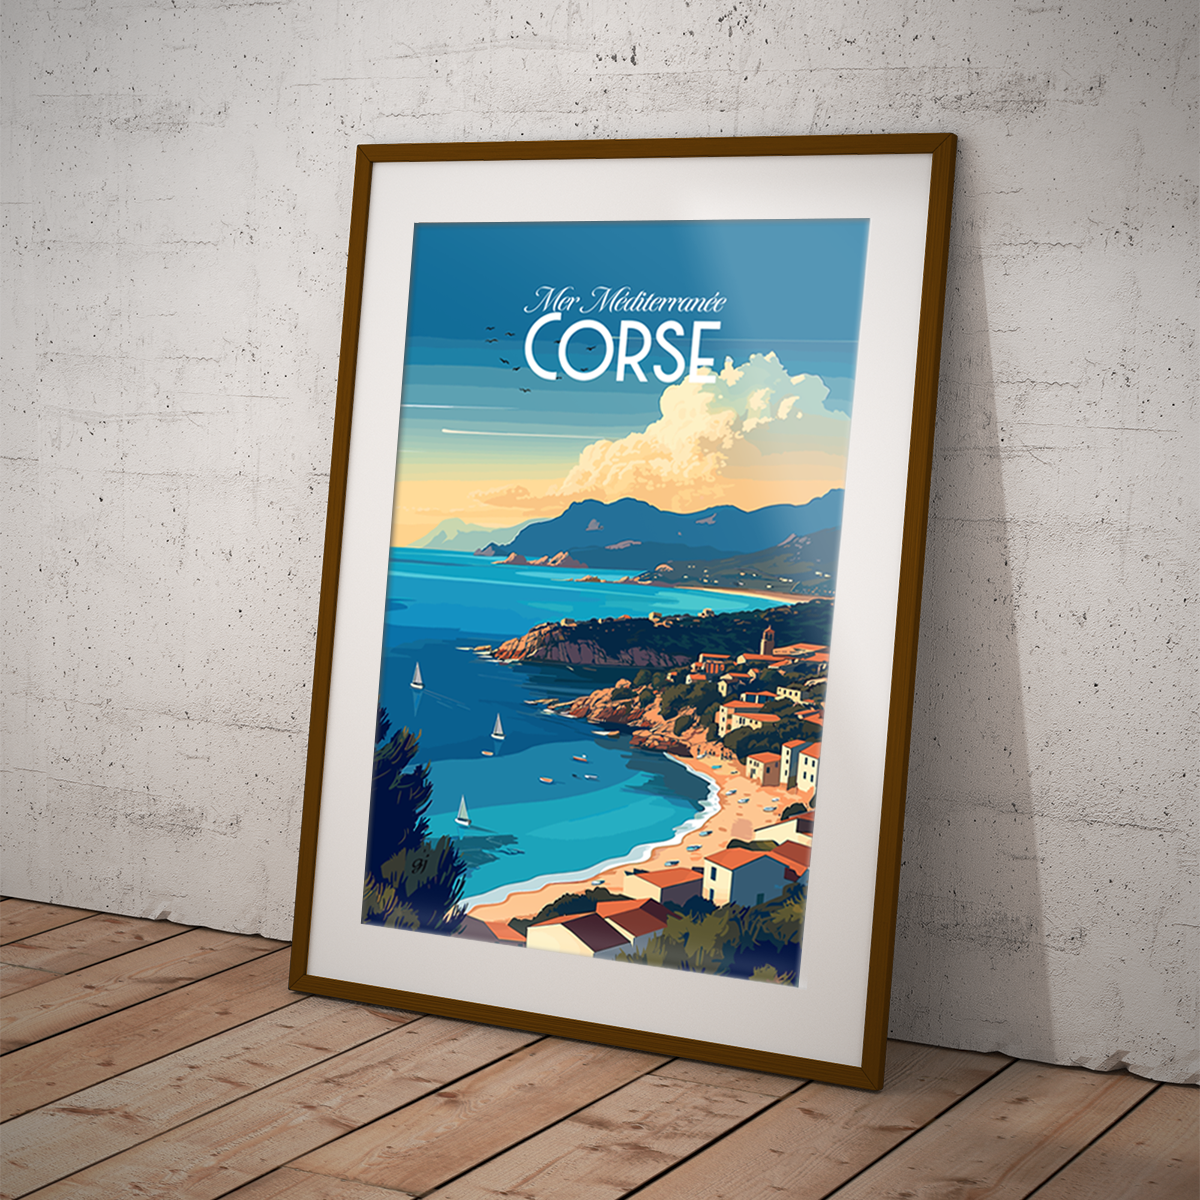 Corse - Plage poster by bon voyage design